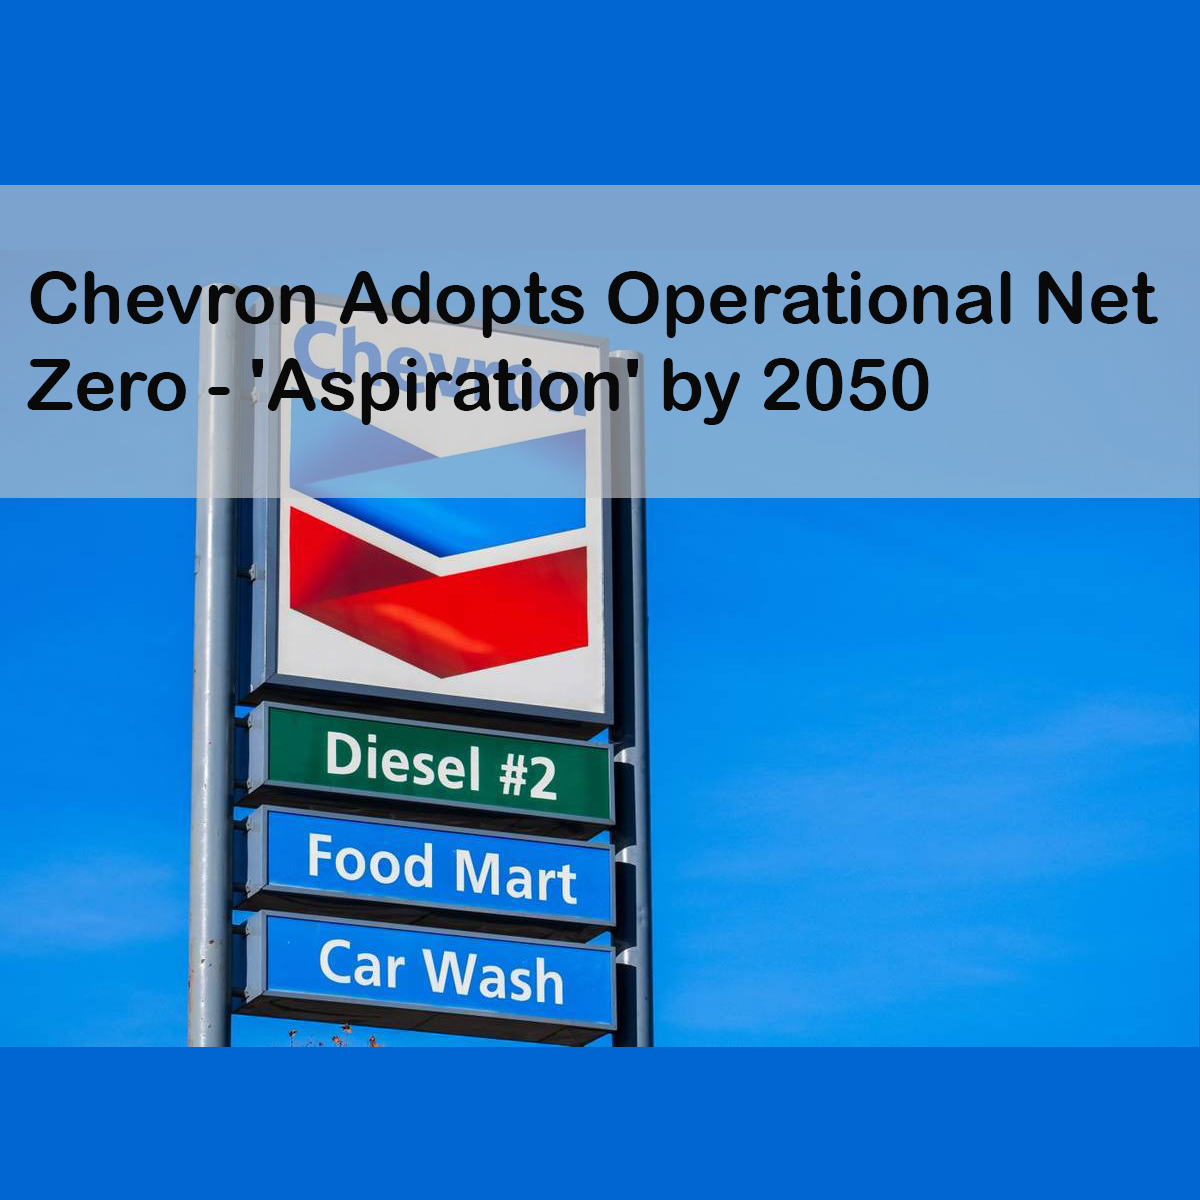 Chevron Adopts Operational Net Zero - 'Aspiration' by 2050